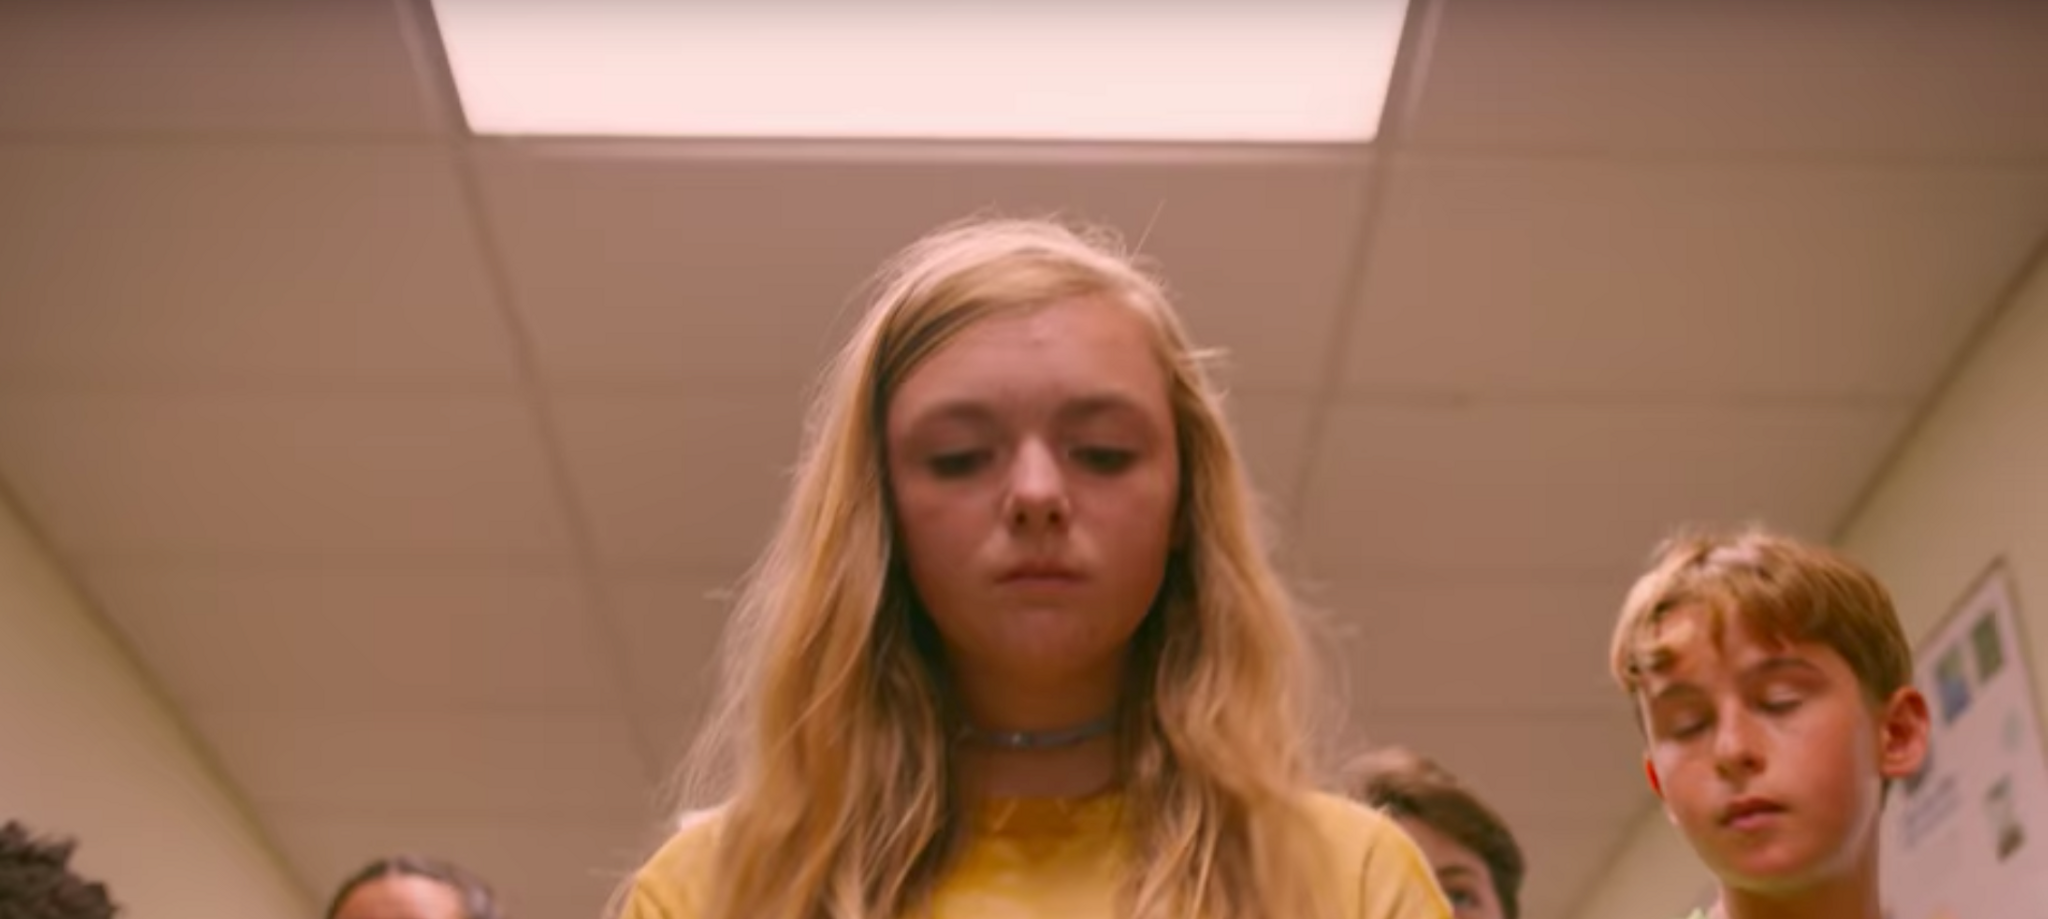 Eighth Grade honestly presents teen life on screen